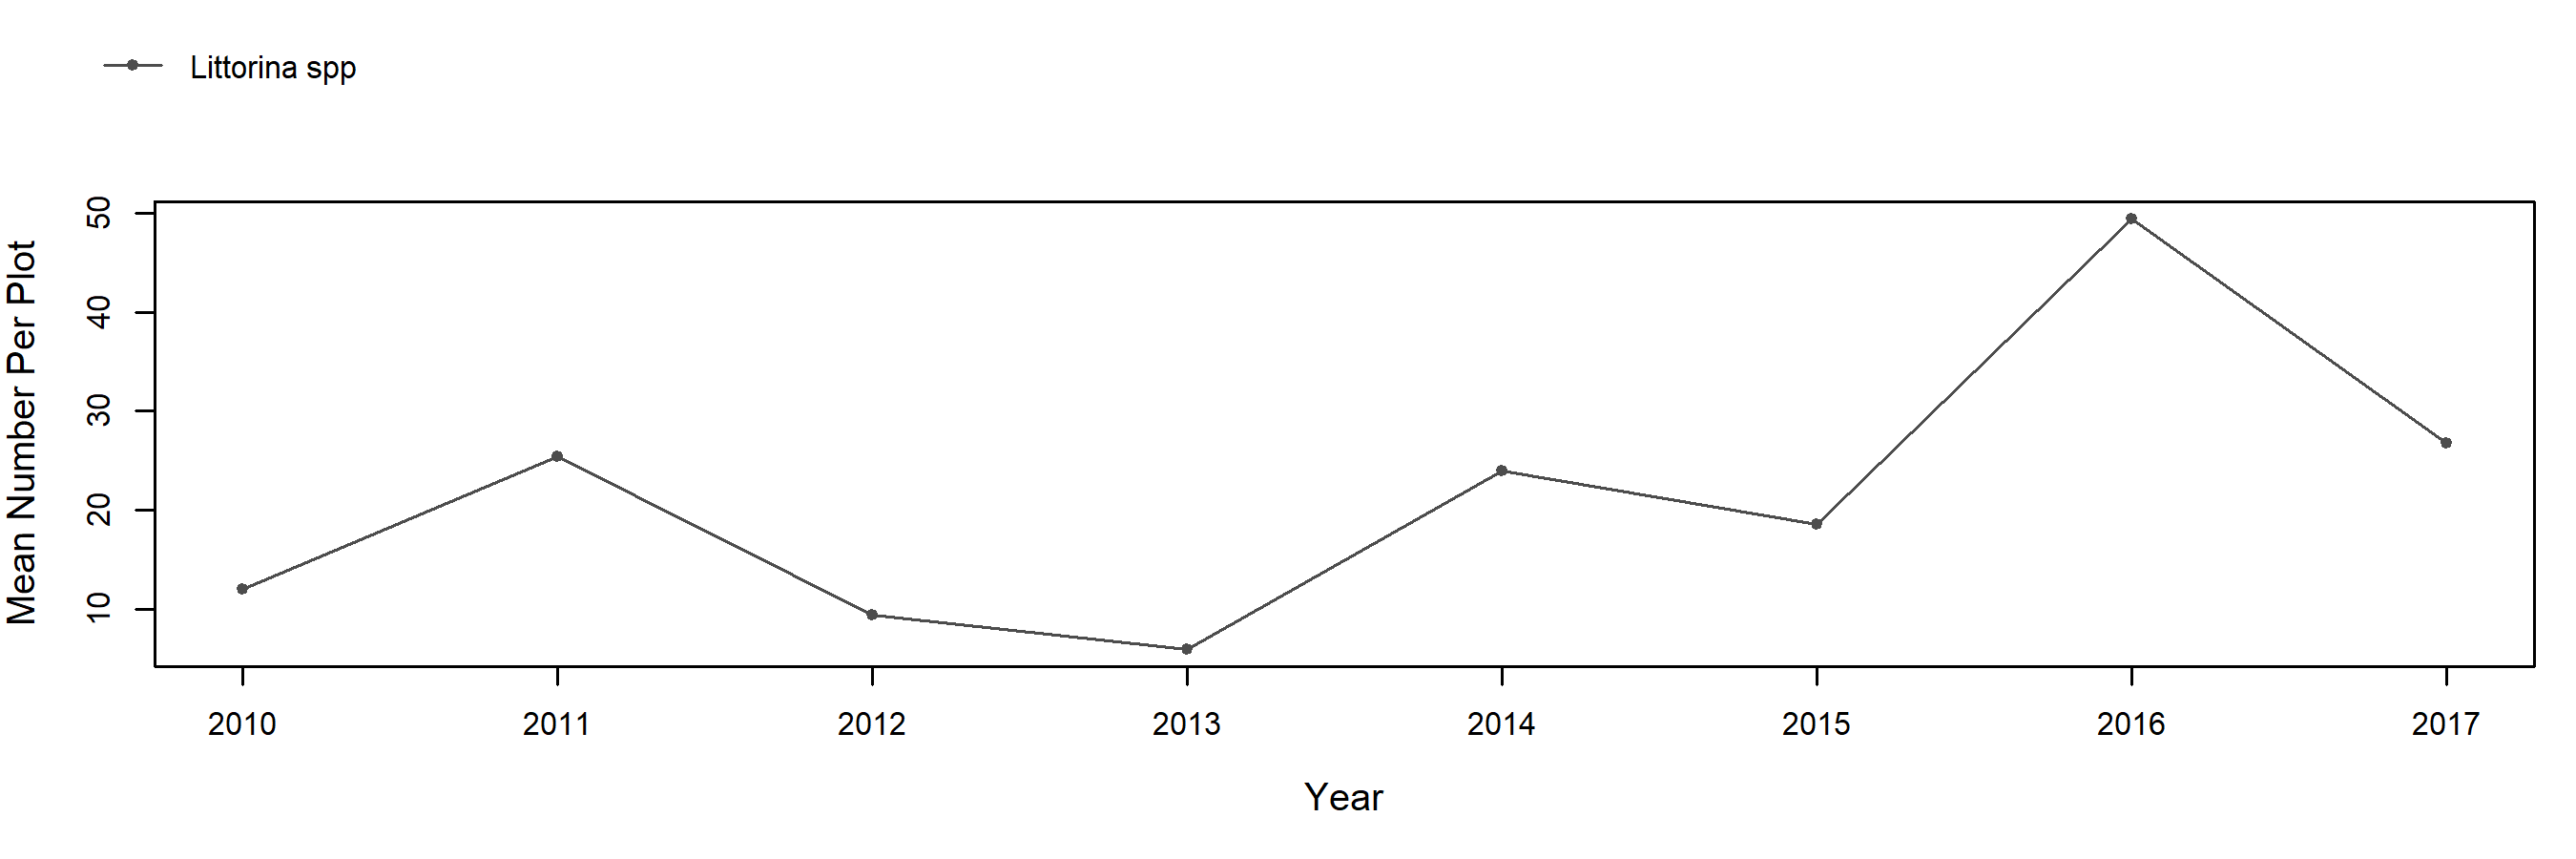 Arroyo Hondo rock trend plot